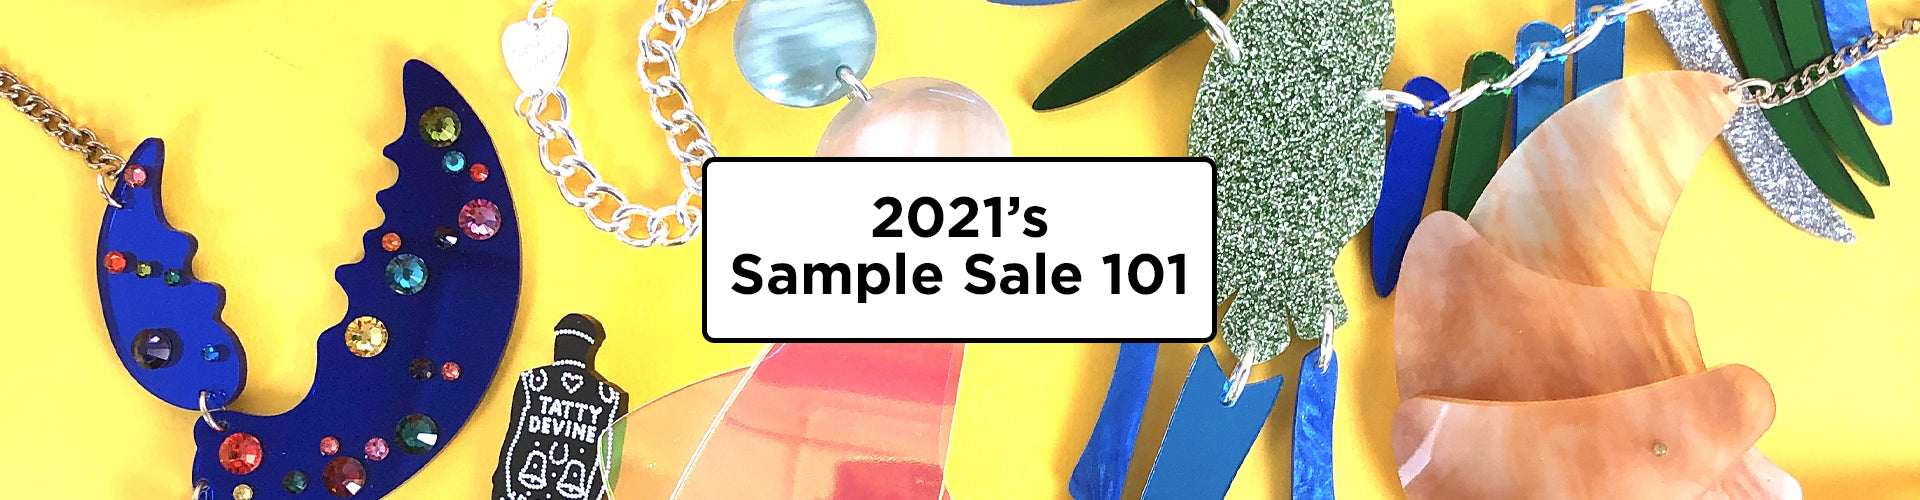 2021's Online Sample Sale 101